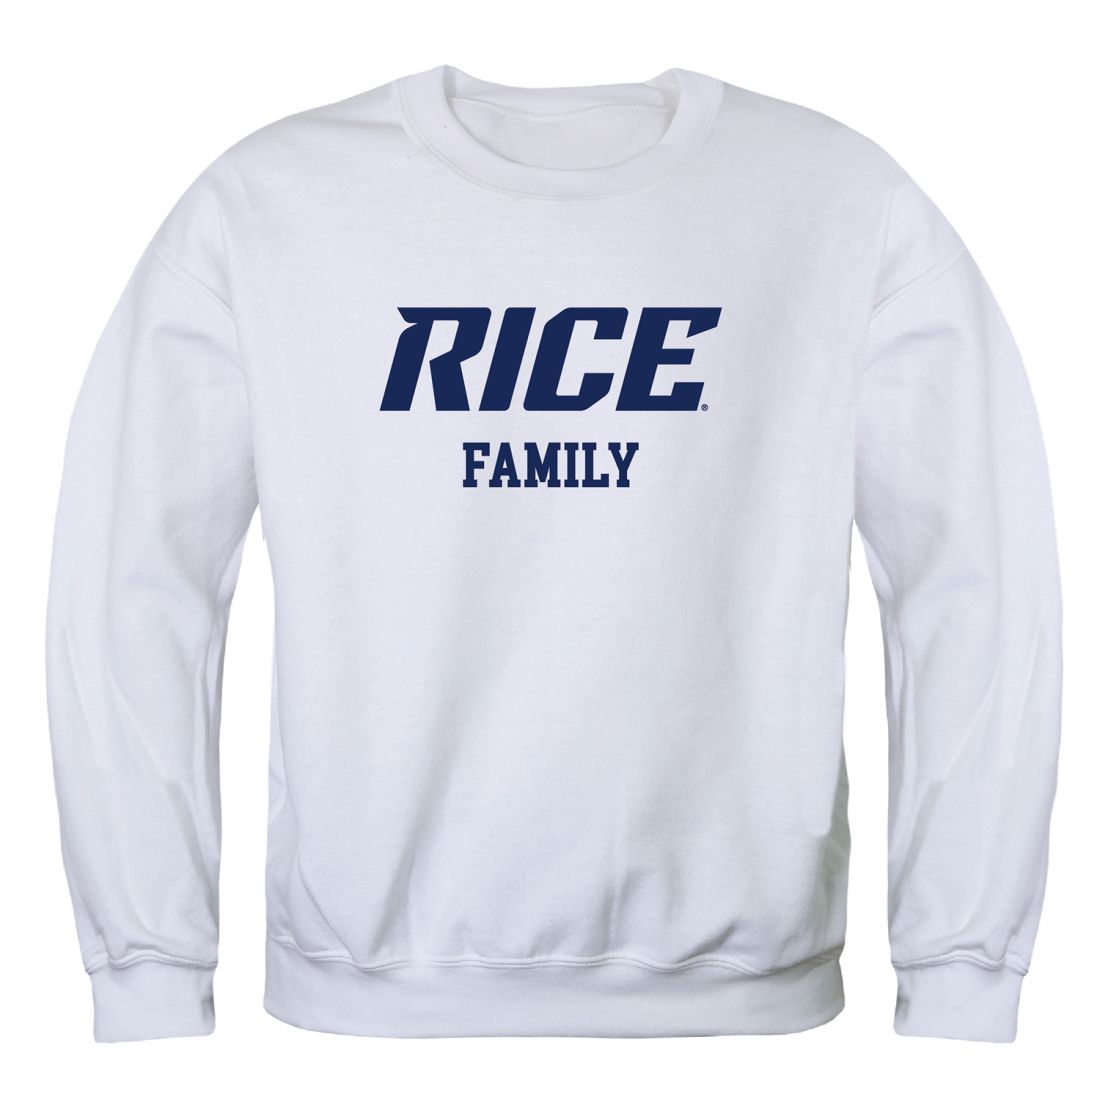 Rice-University-Owls-Family-Fleece-Crewneck-Pullover-Sweatshirt